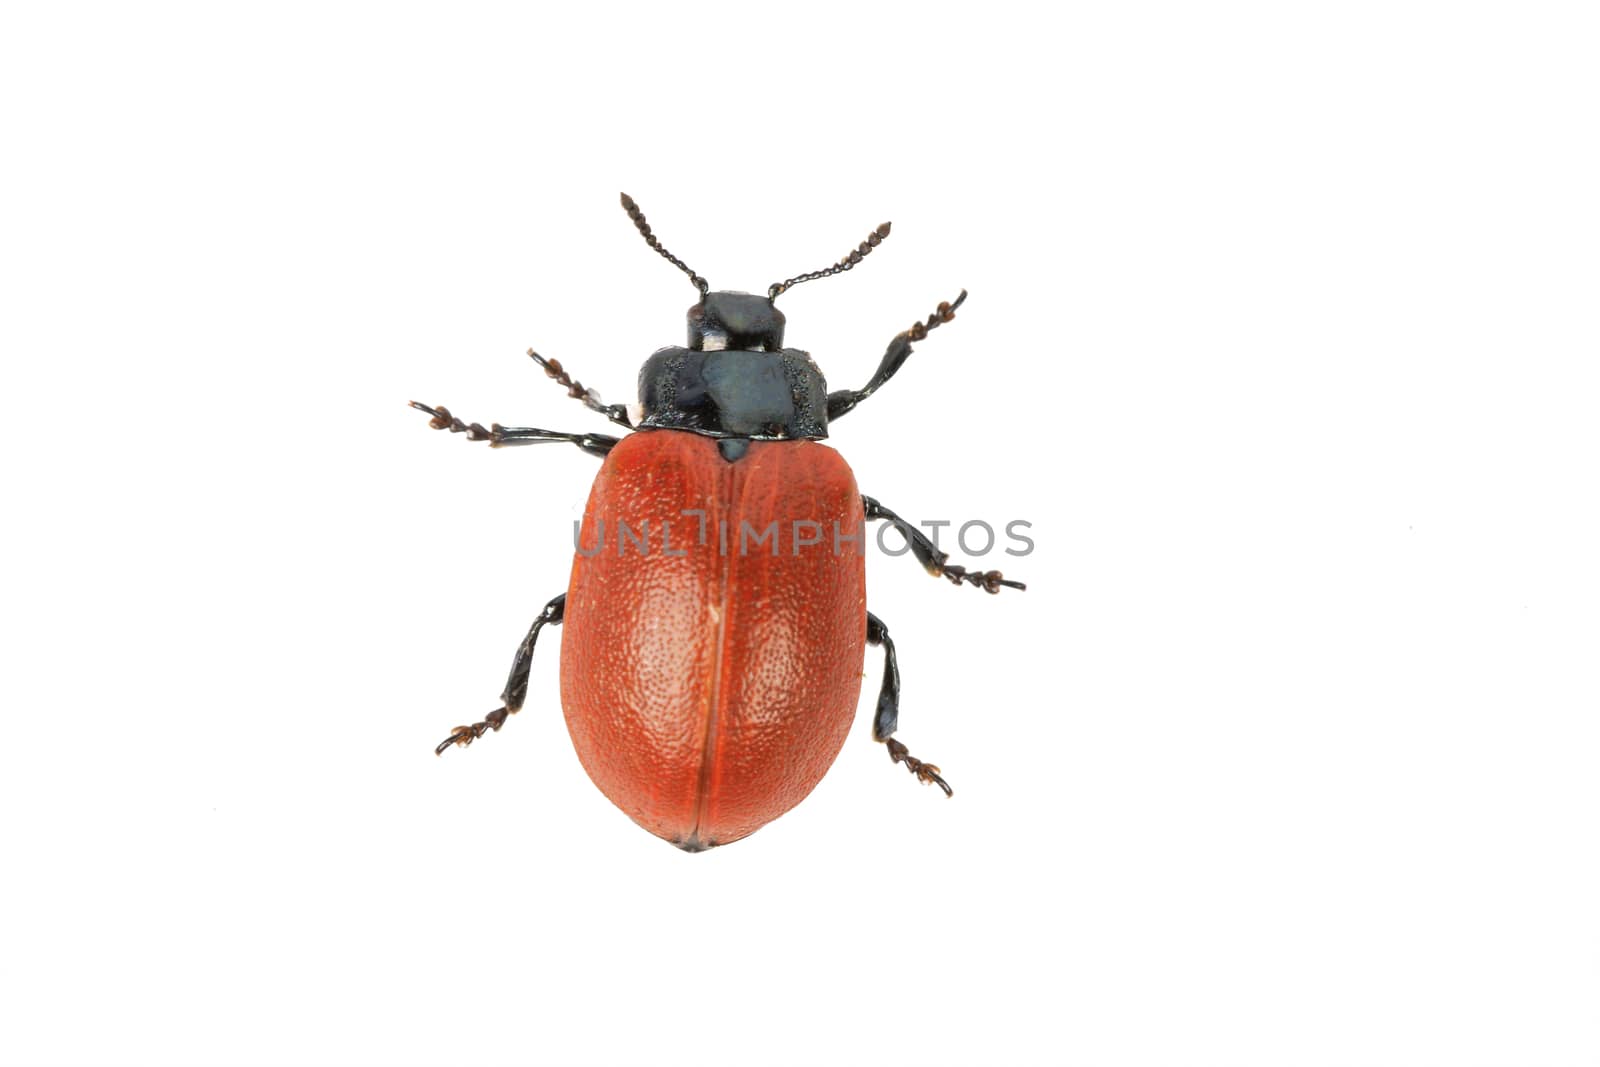 broad-shouldered leaf beetle Chrysomela populi on a white background by neryx